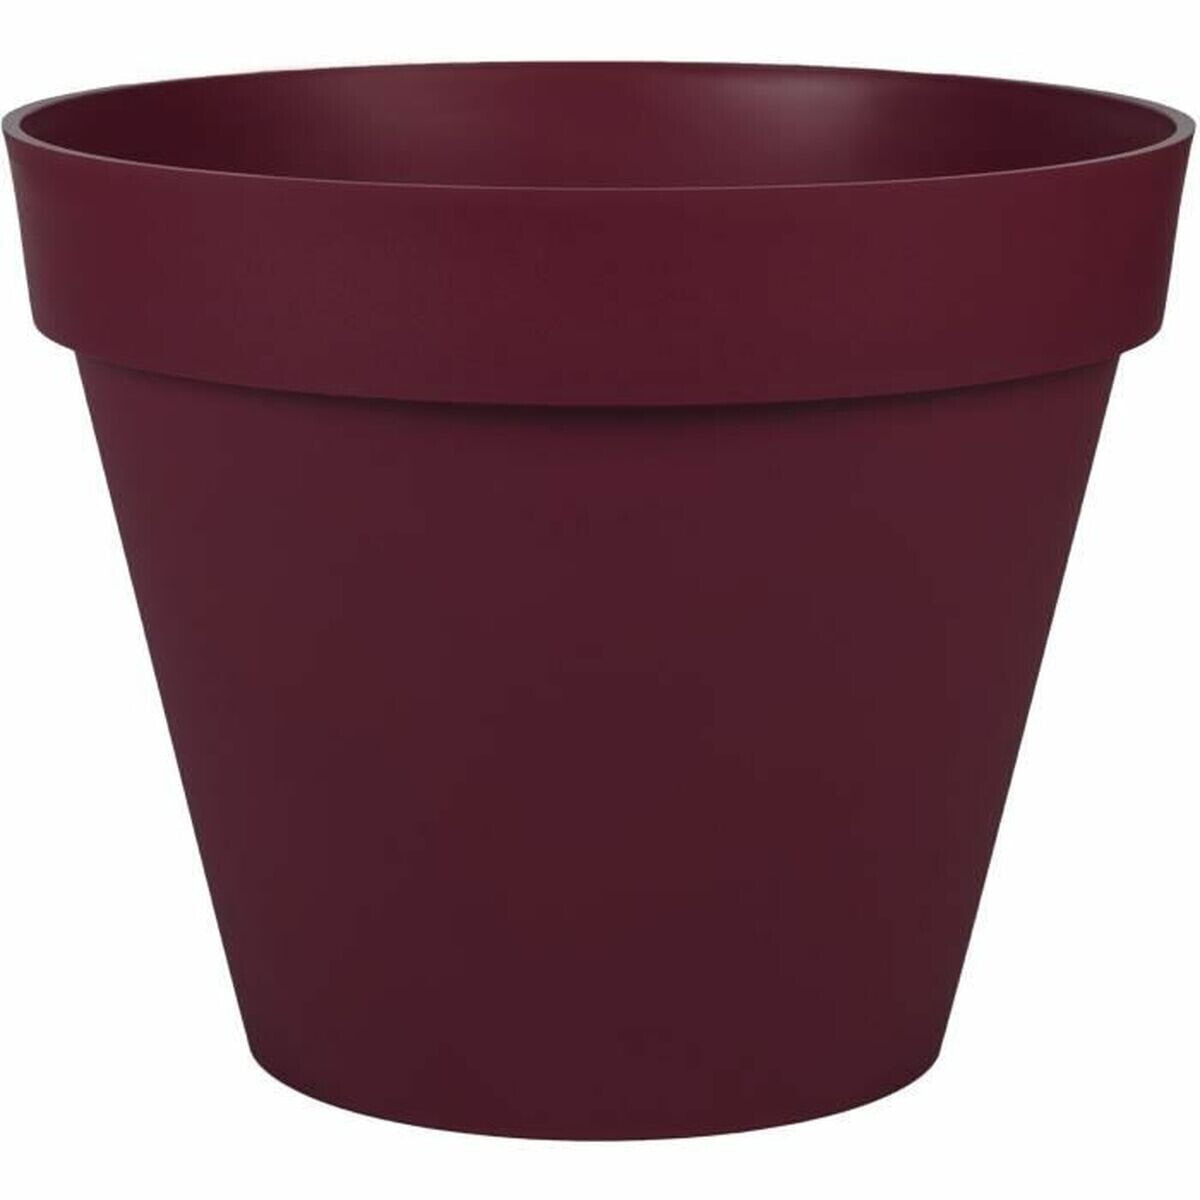 Plant pot EDA Red Ø 41 cm Plastic Circular Modern